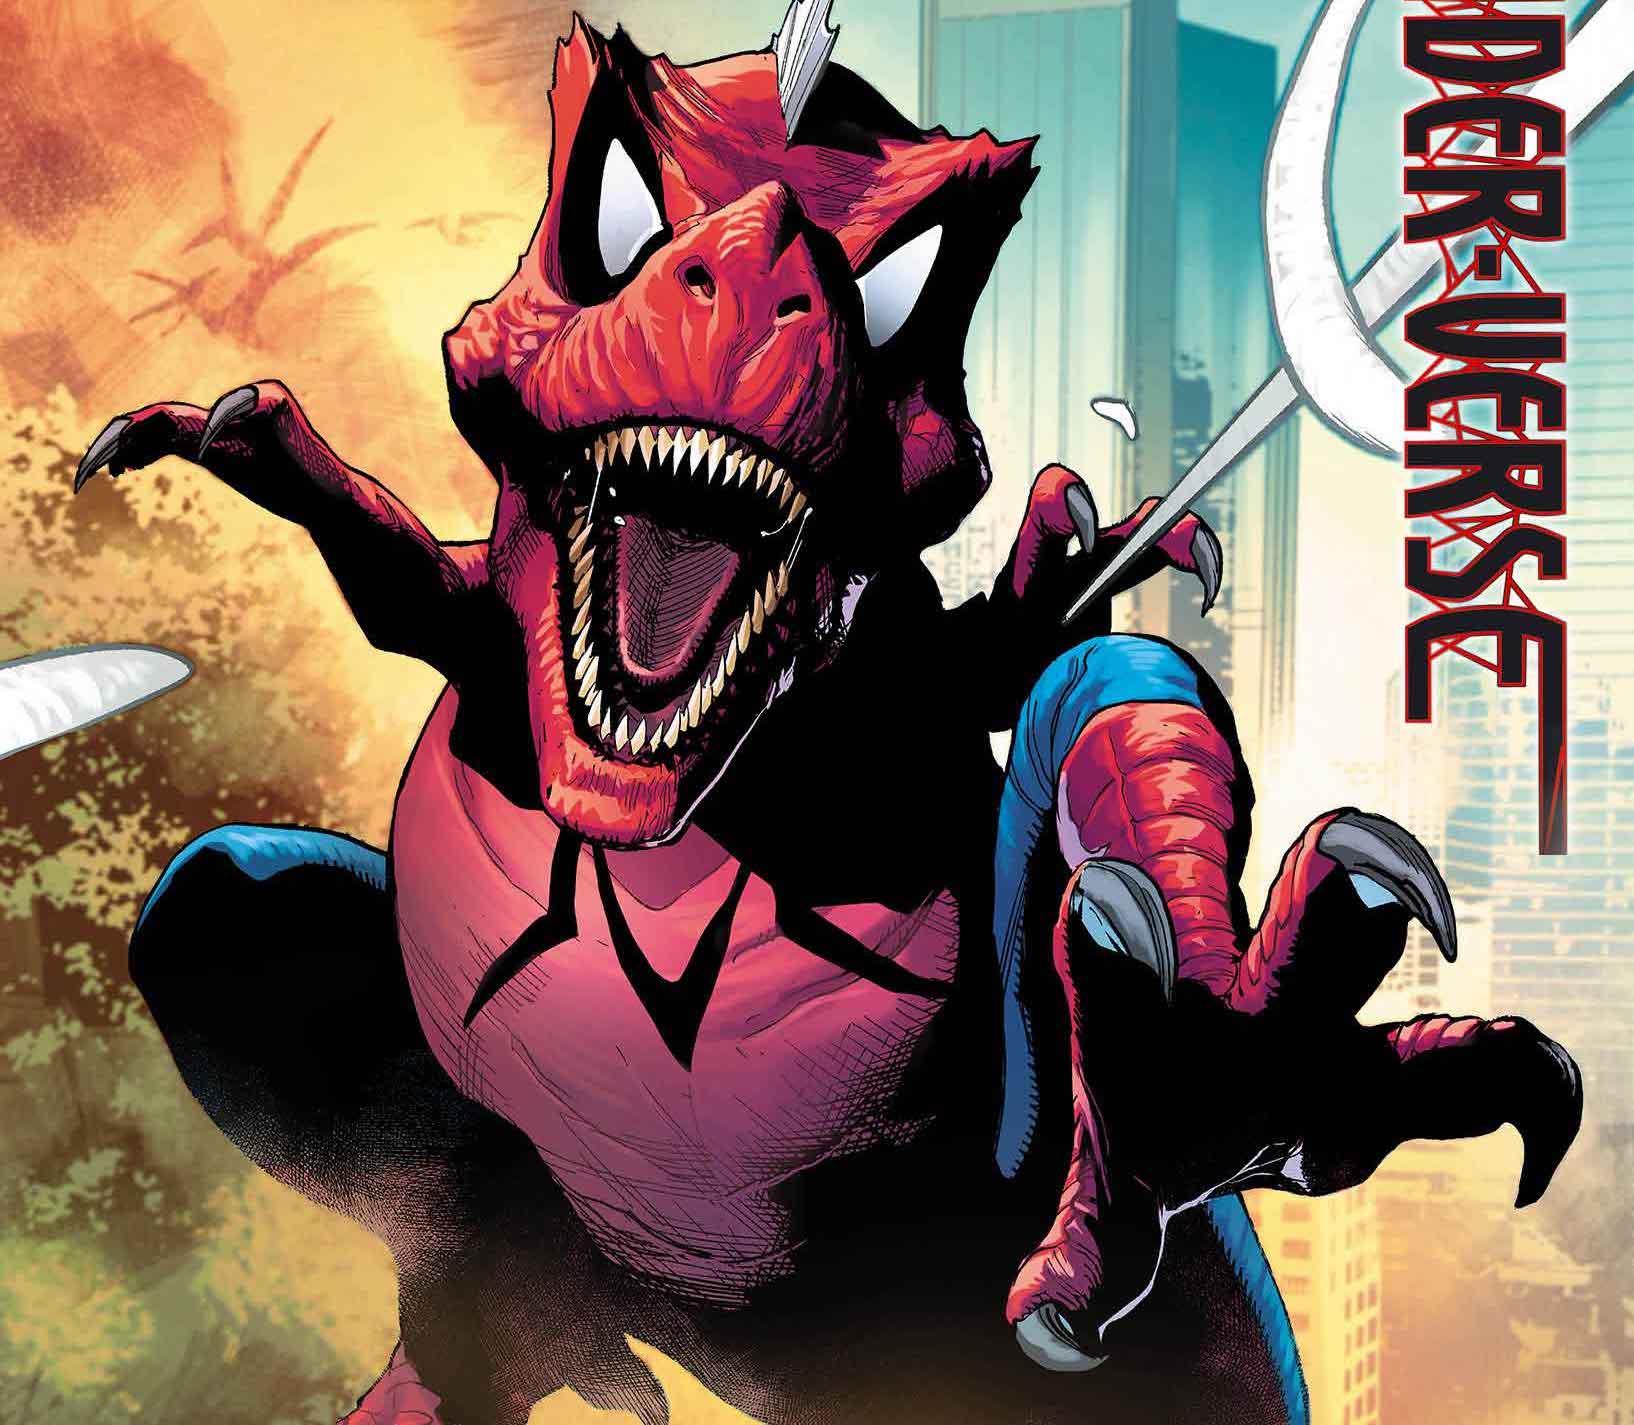 Meet Spider-Rex, debuting in 'Edge of Spider-Verse' #1